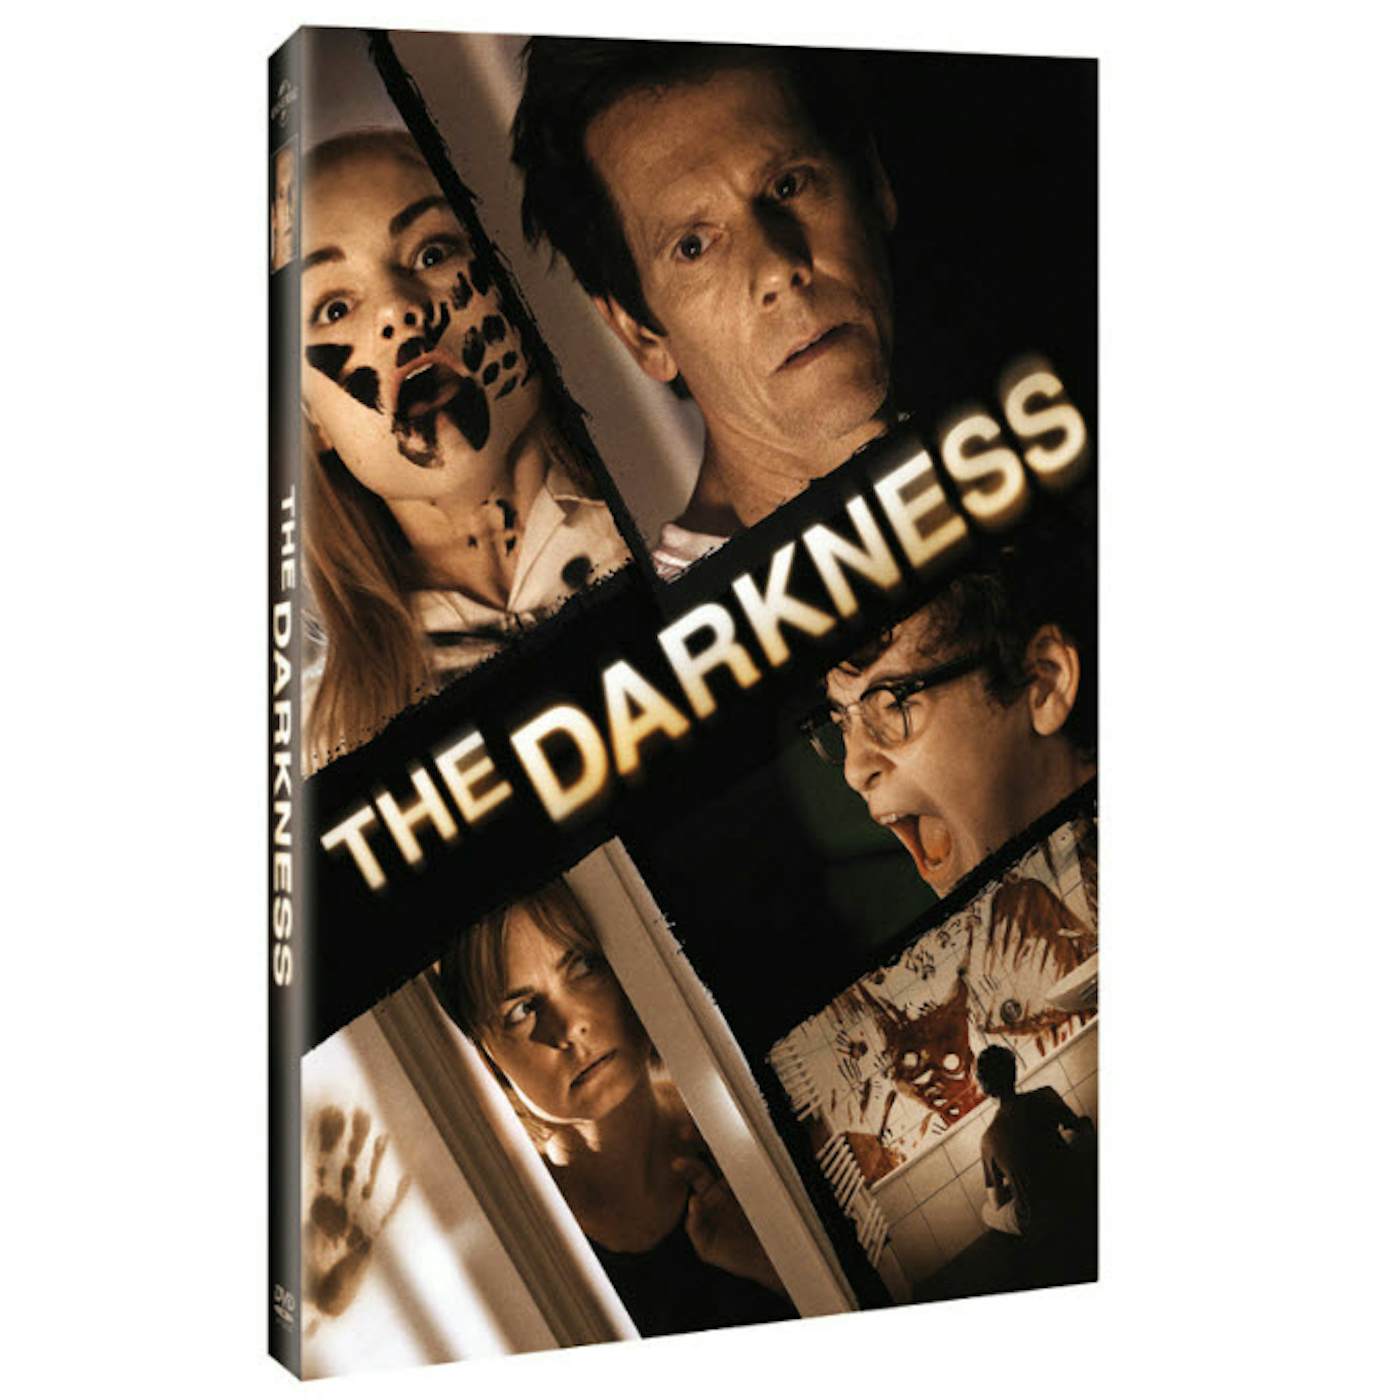 The Darkness DVD